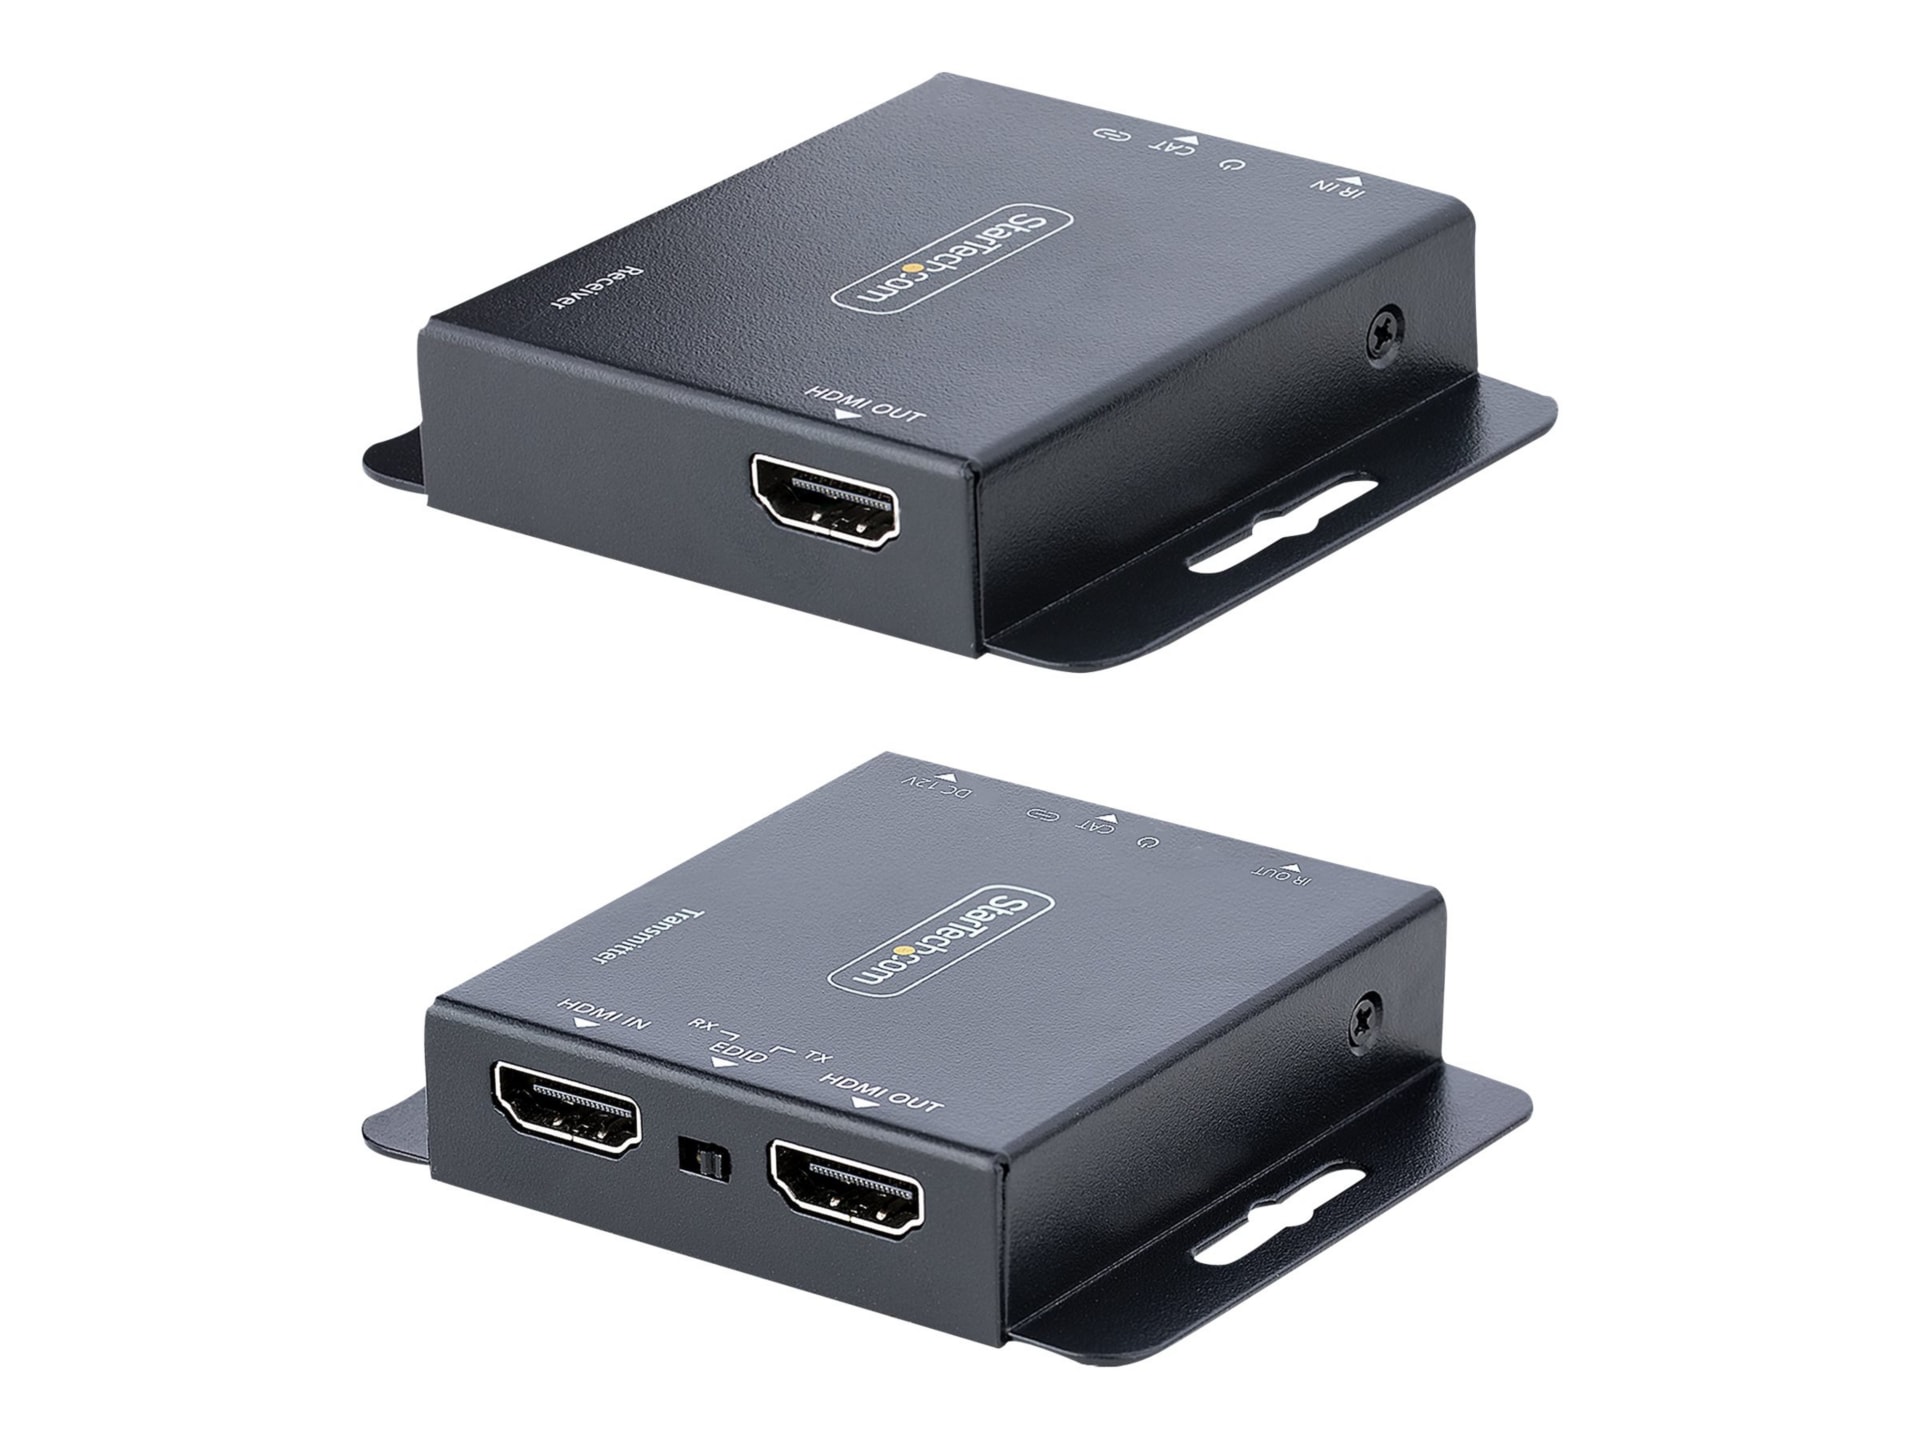 StarTech.com 4K HDMI Extender over CAT6/CAT5 Ethernet Cable, 4K30, 1080p